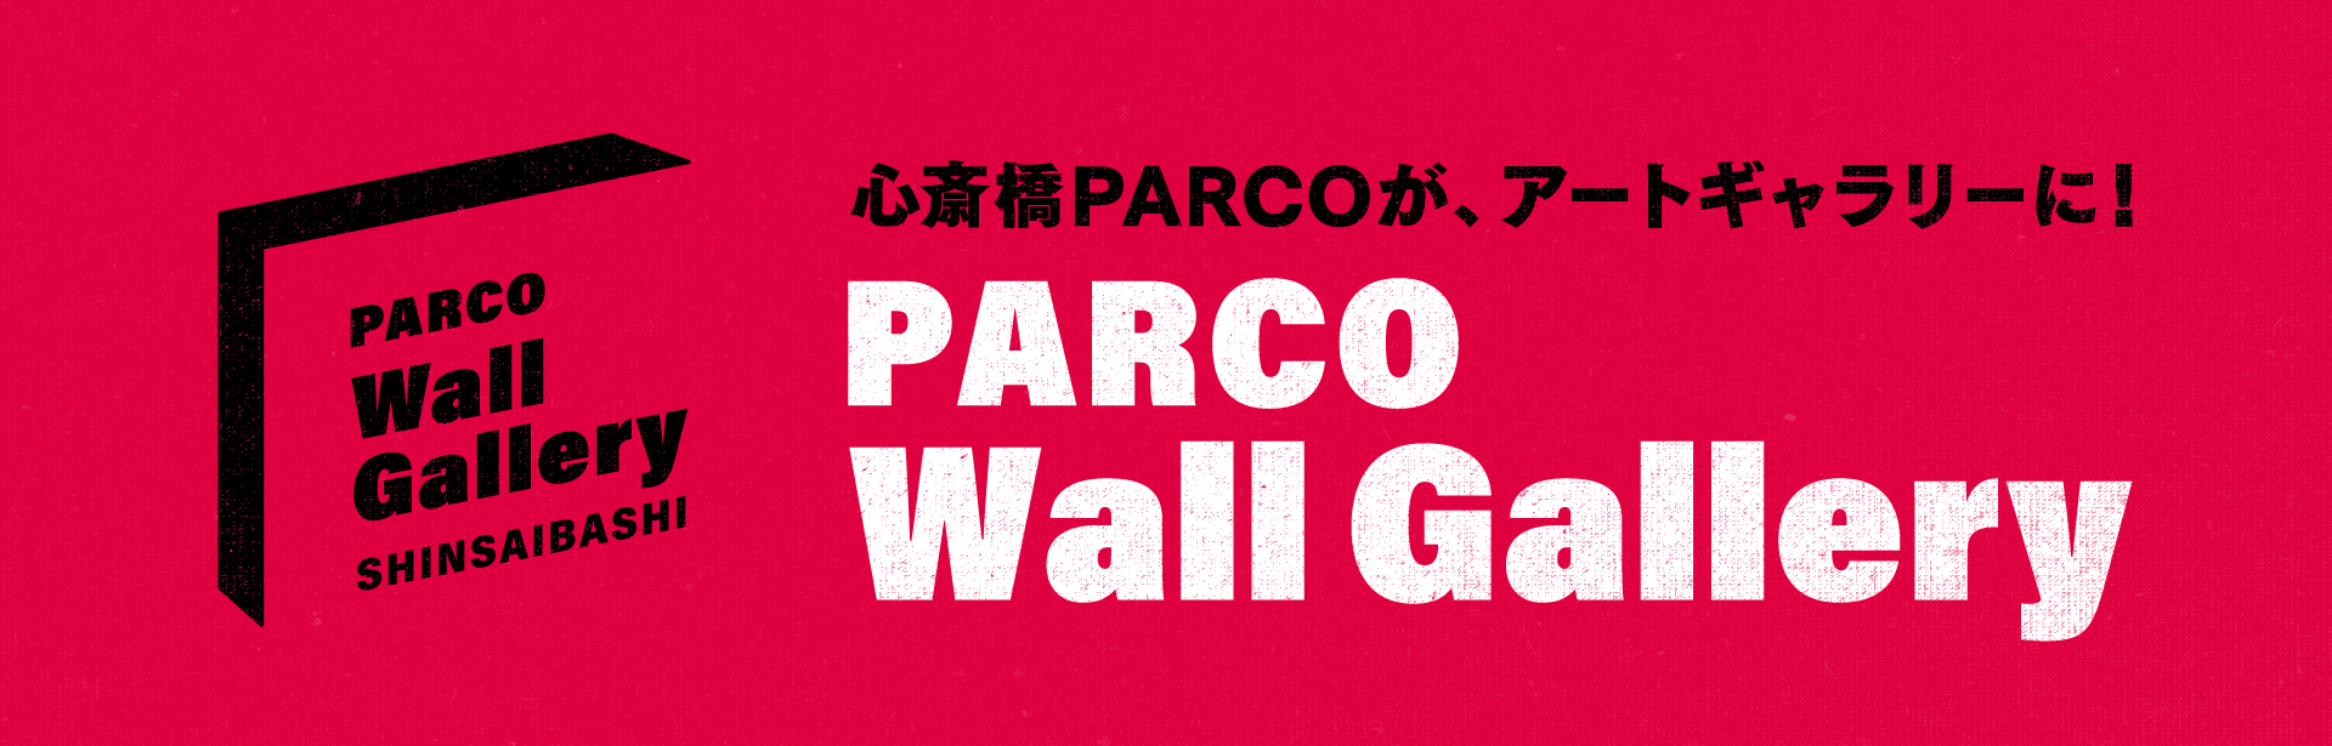 PARCO Wall Gallery SHINSAIBASHI